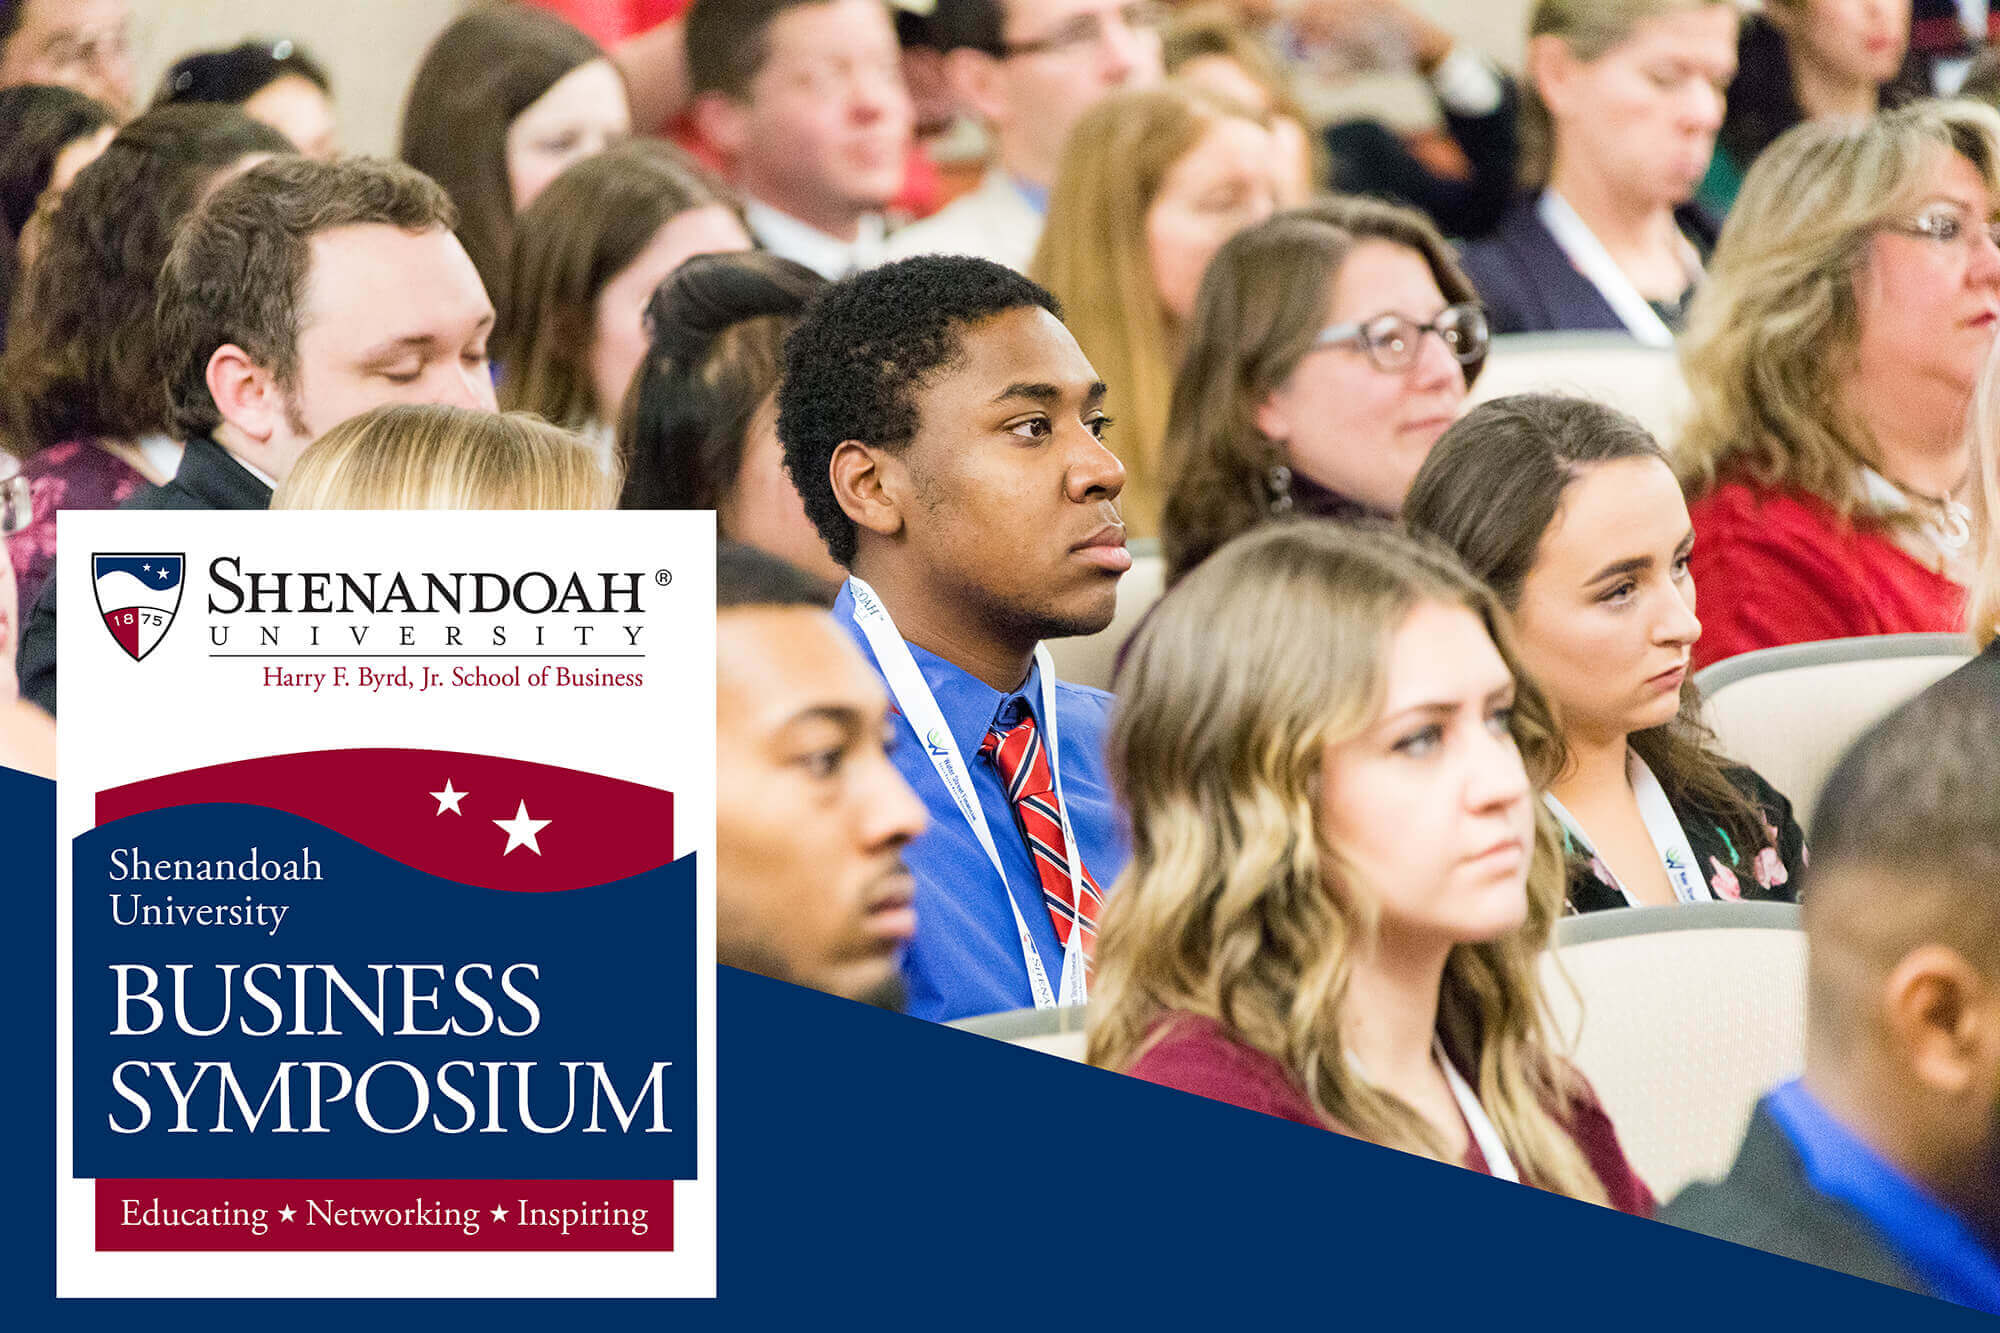 Business Symposium Brings Inspirational Speakers to Shenandoah Entrepreneur Marilyn Tam and Whistler Chris Ullman Headline Annual Event